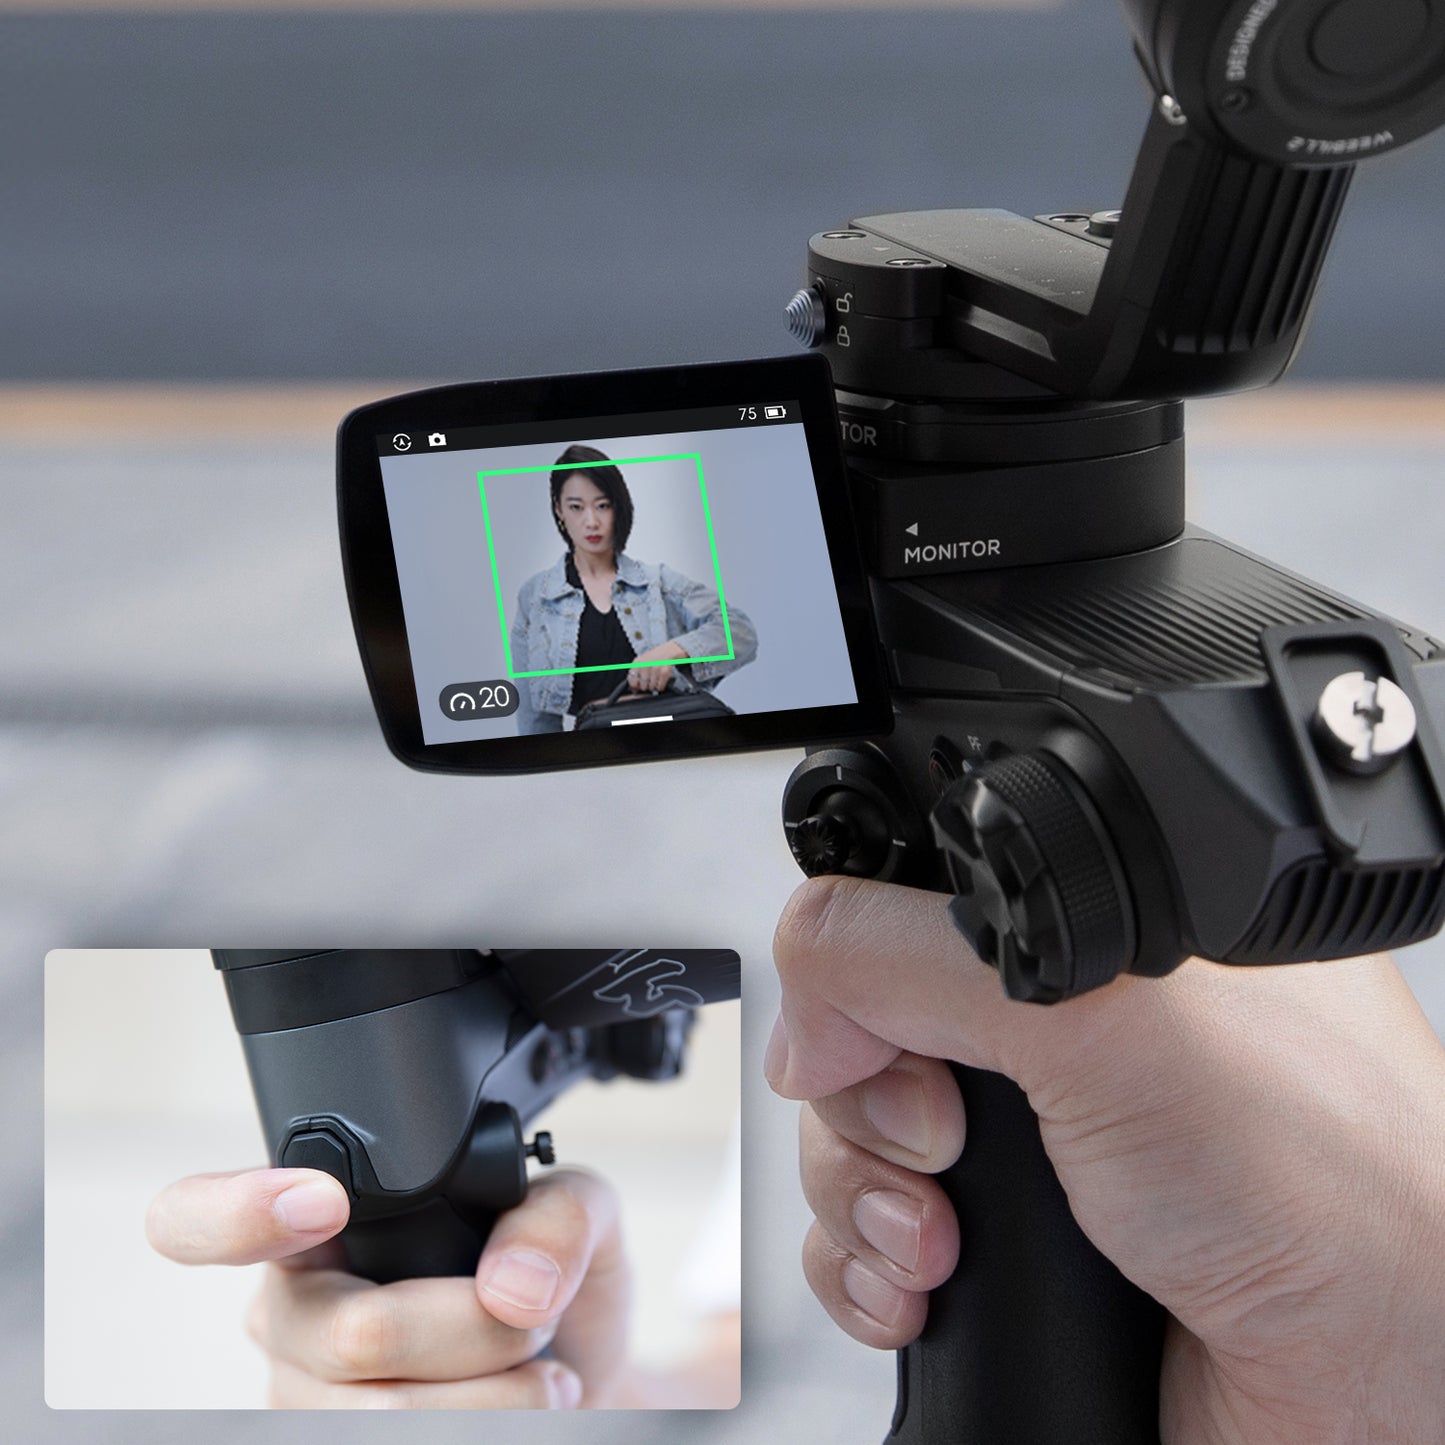 ZHIYUN WEEBILL 2 Camera gimbal Handheld Stabilizer